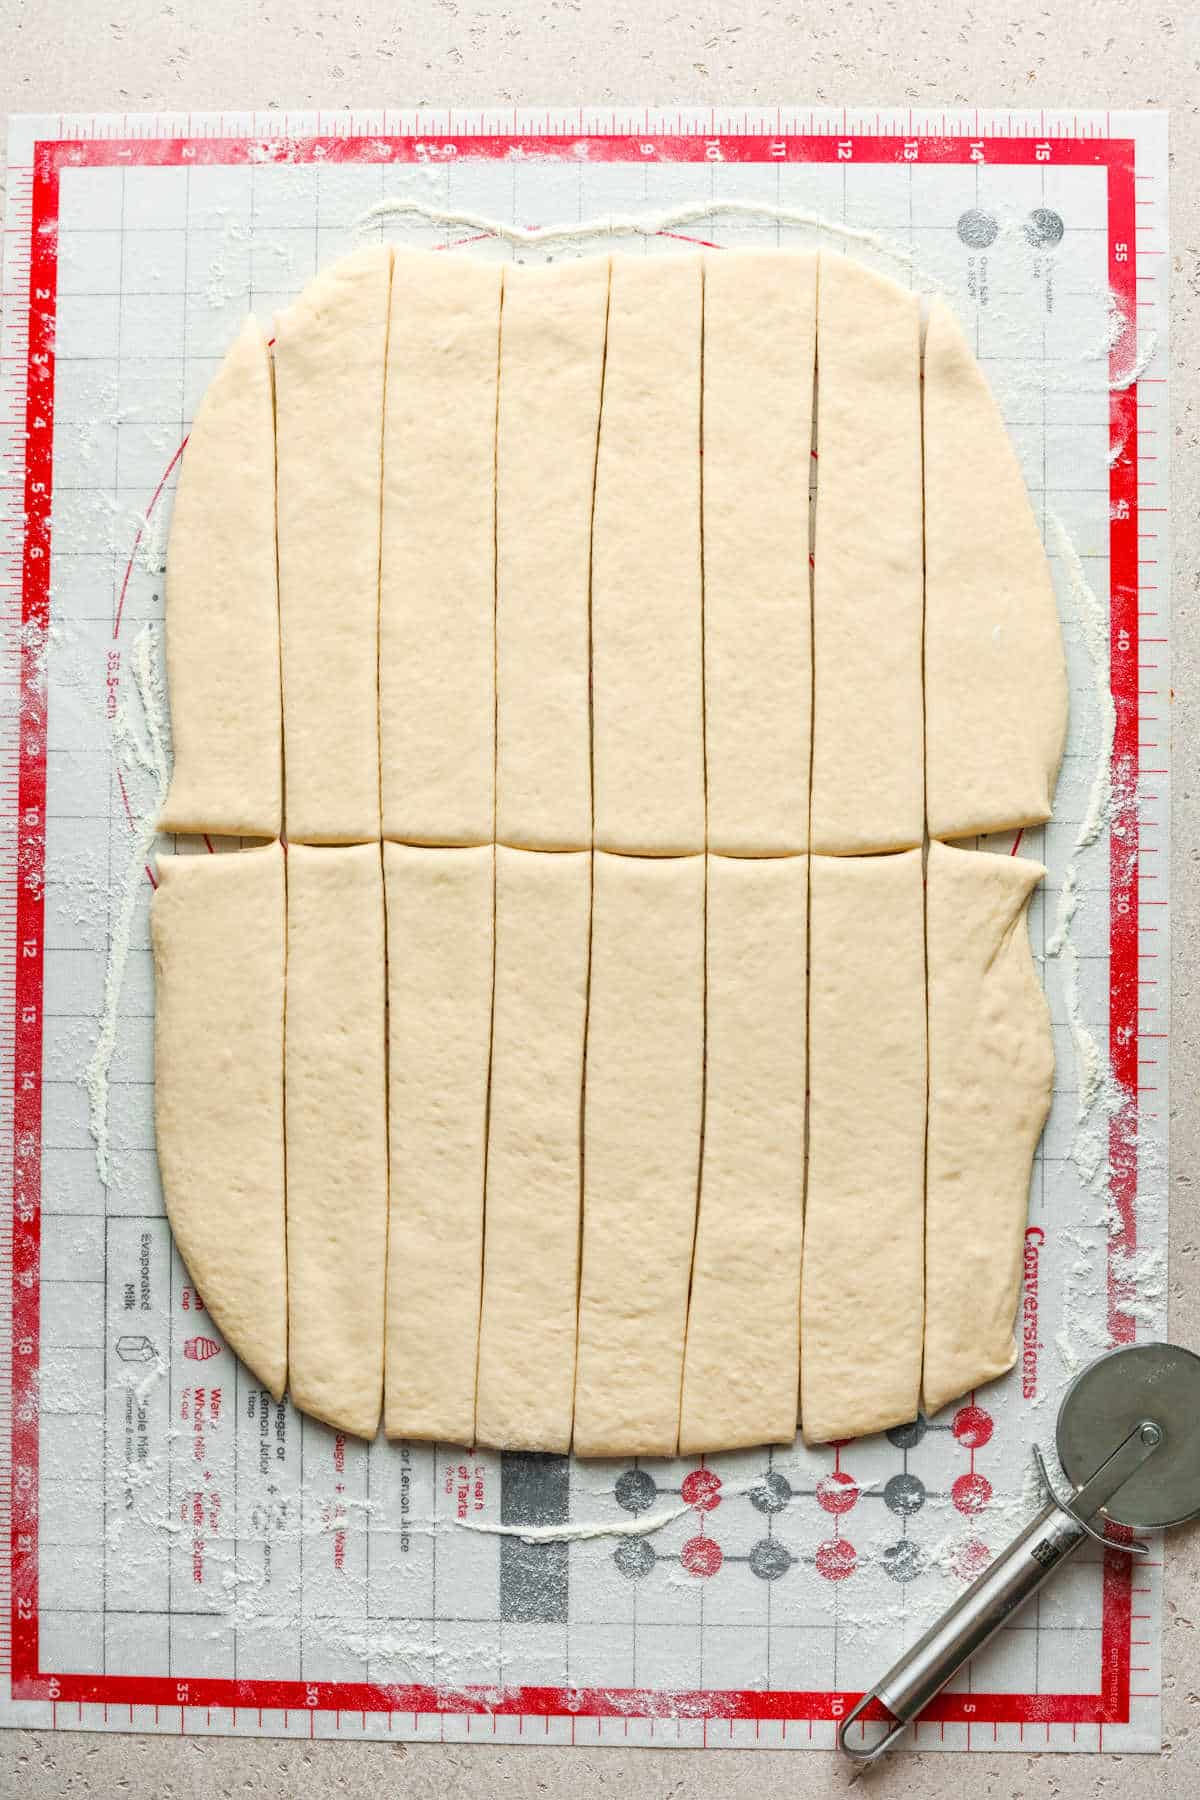 Cinnamon breadstick dough cut into strips on a baking mat.